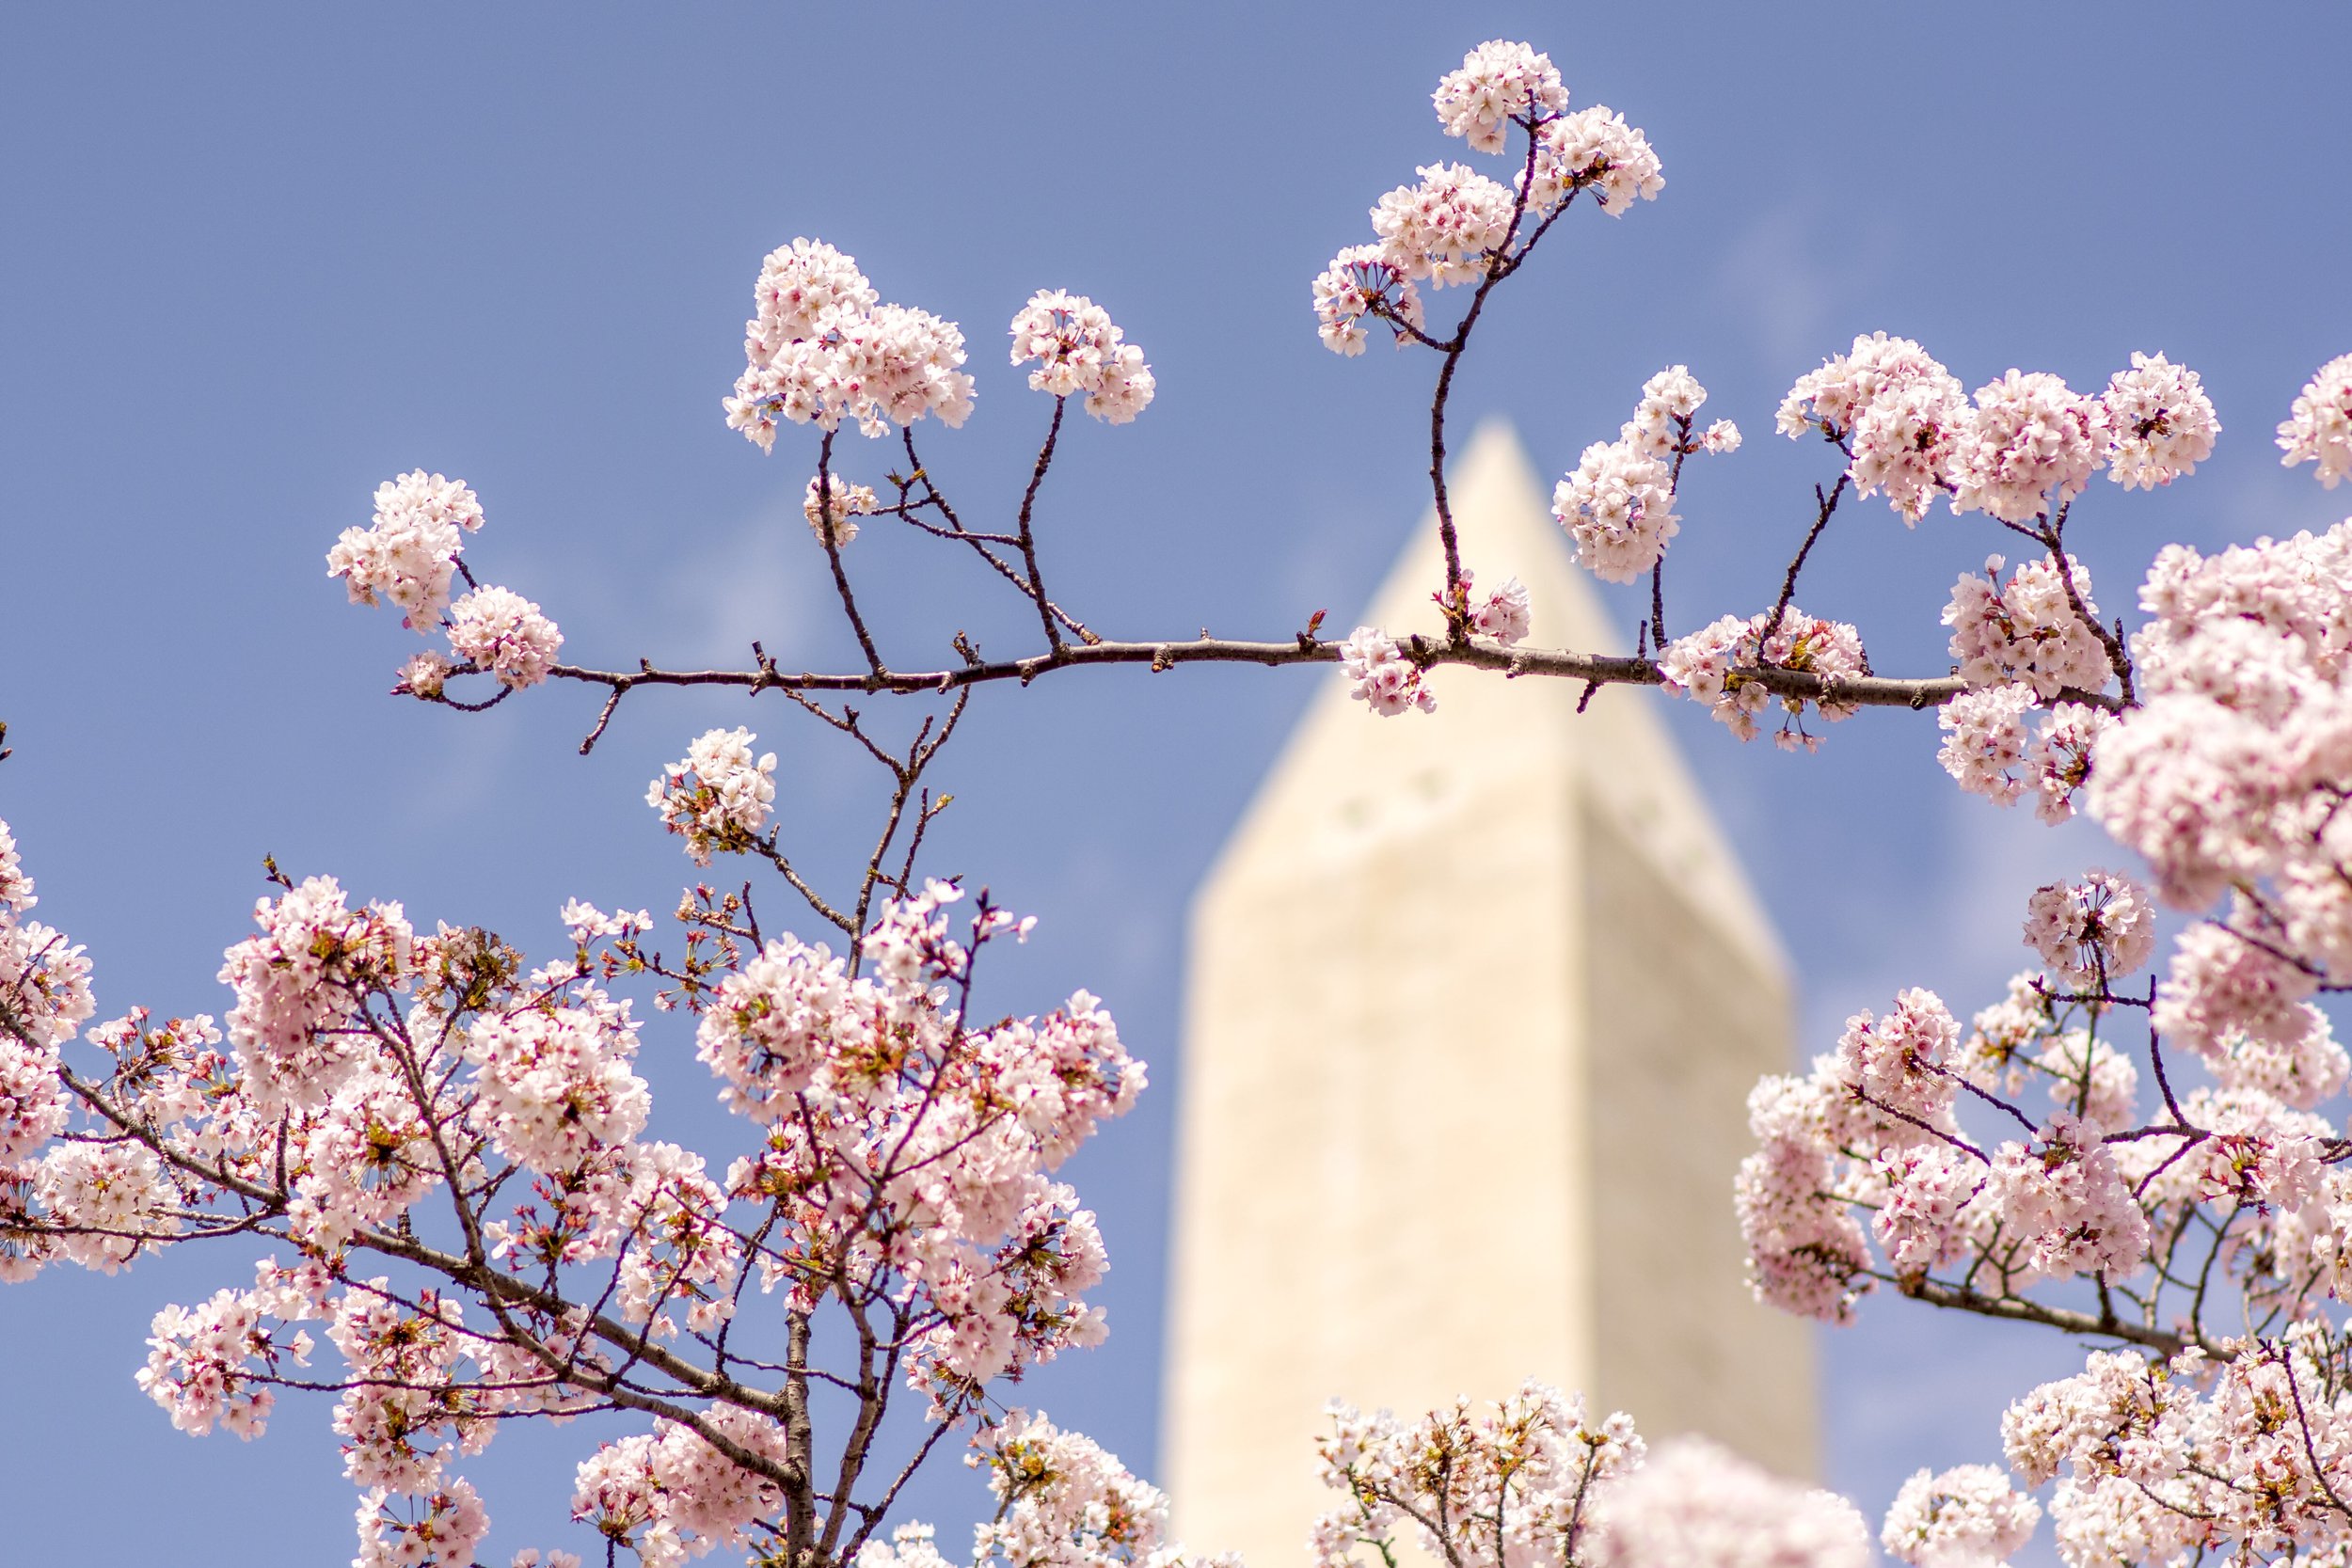 washington-monument-beyond-the-cherry-blossoms-in-2022-11-08-02-56-46-utc.jpg